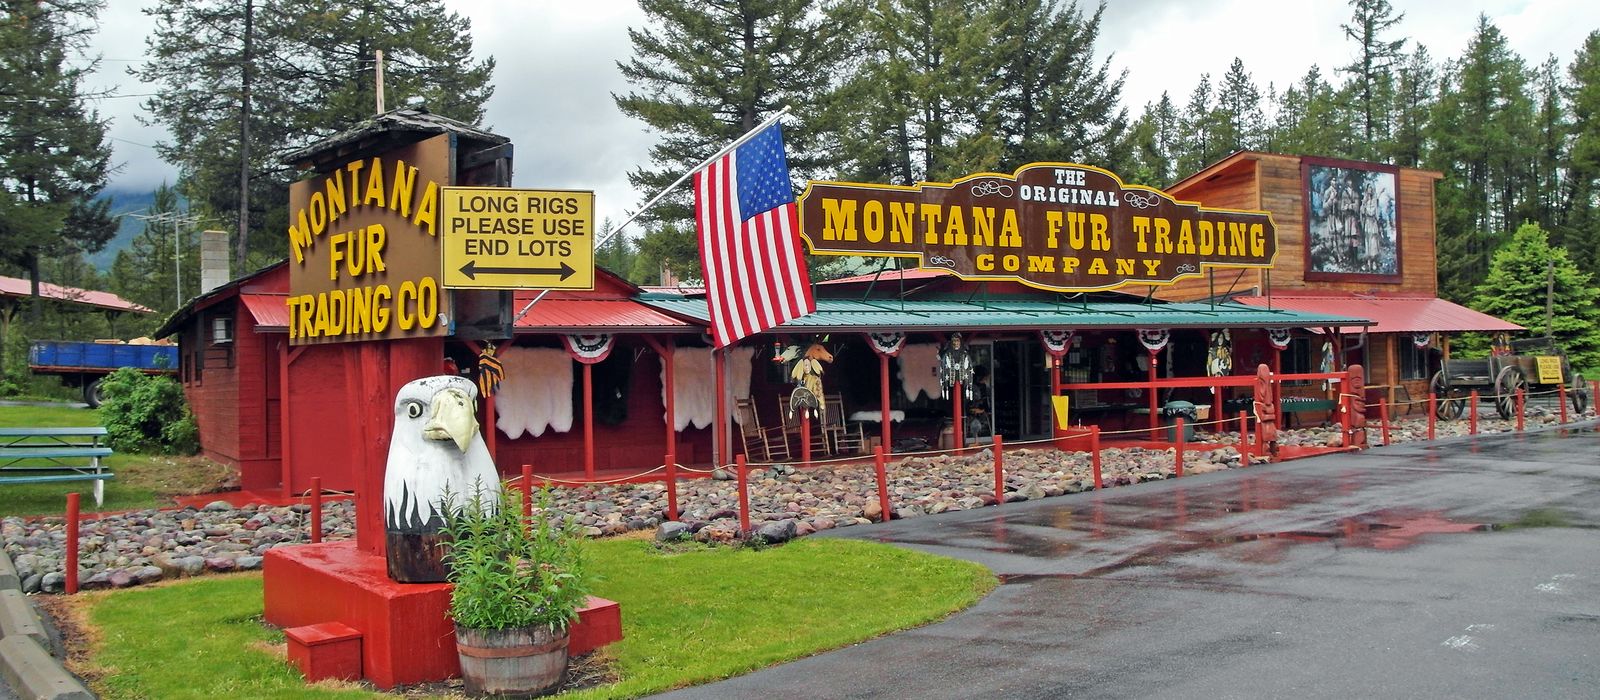 Montana Fur Trading Company